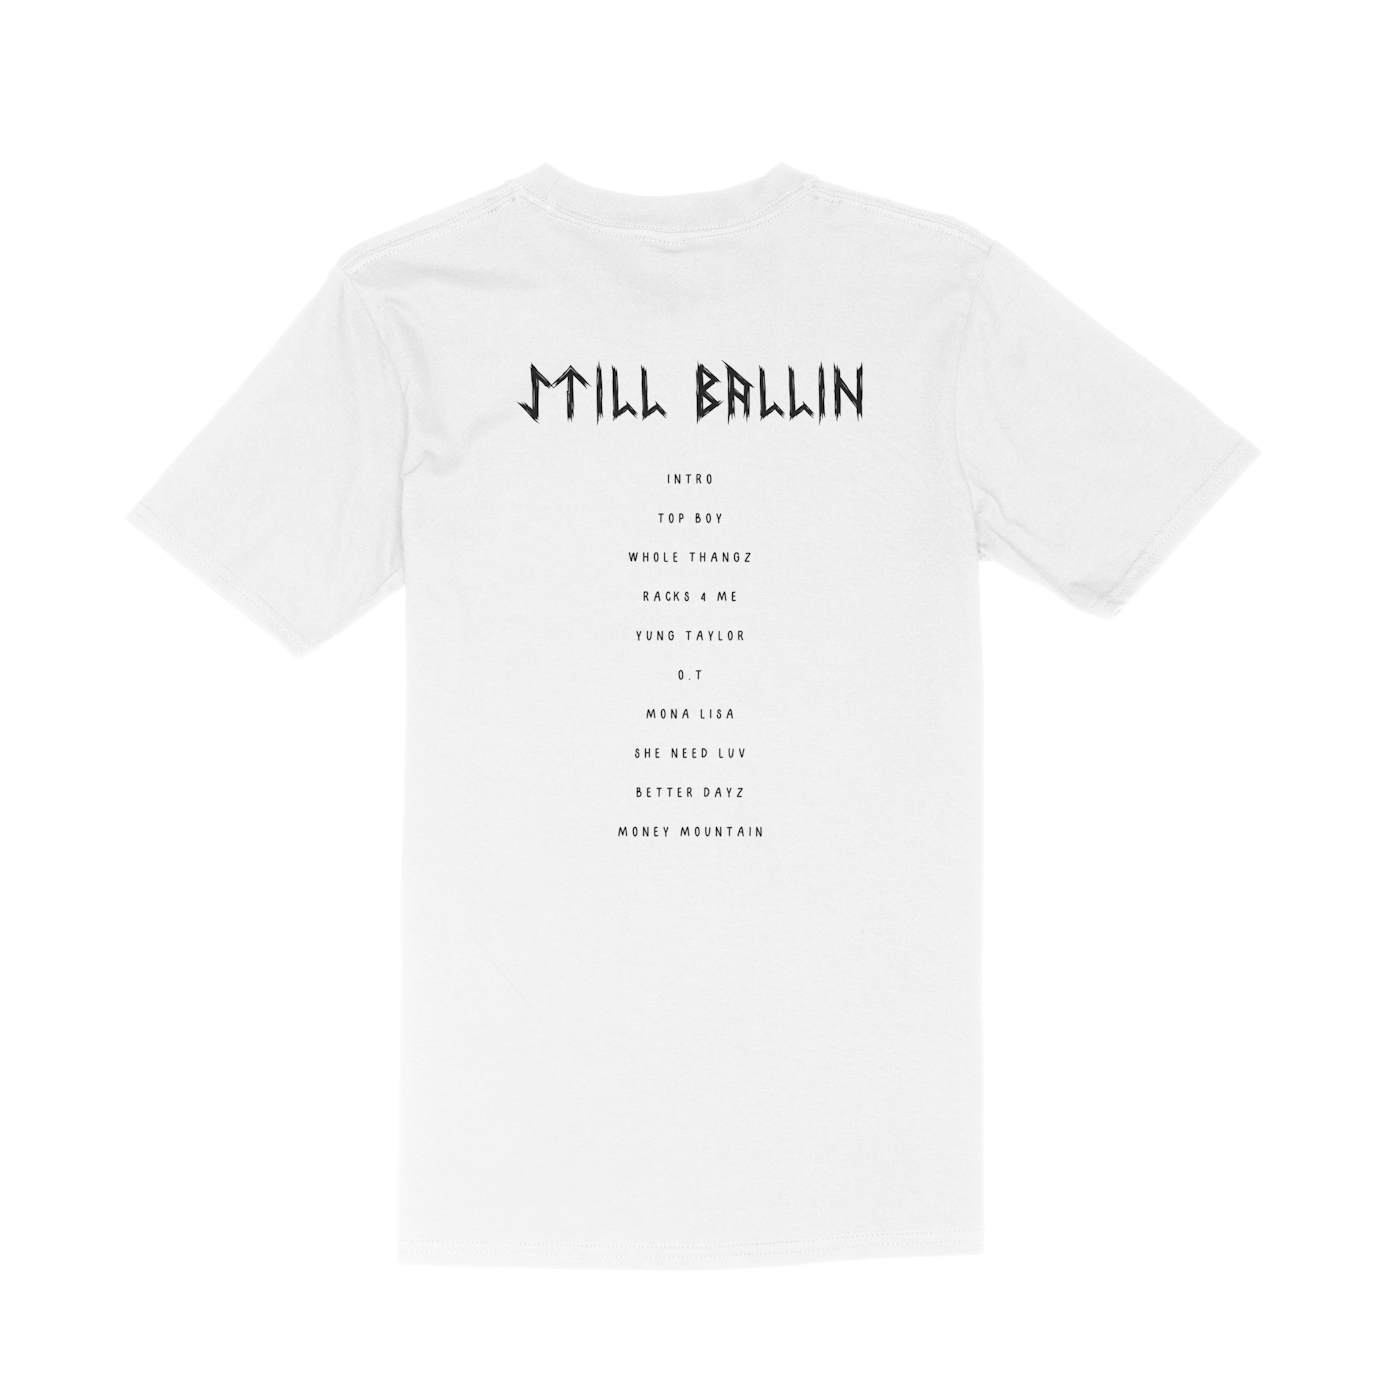 Taylor J Still Ballin Tracklist T-Shirt (White/Black)